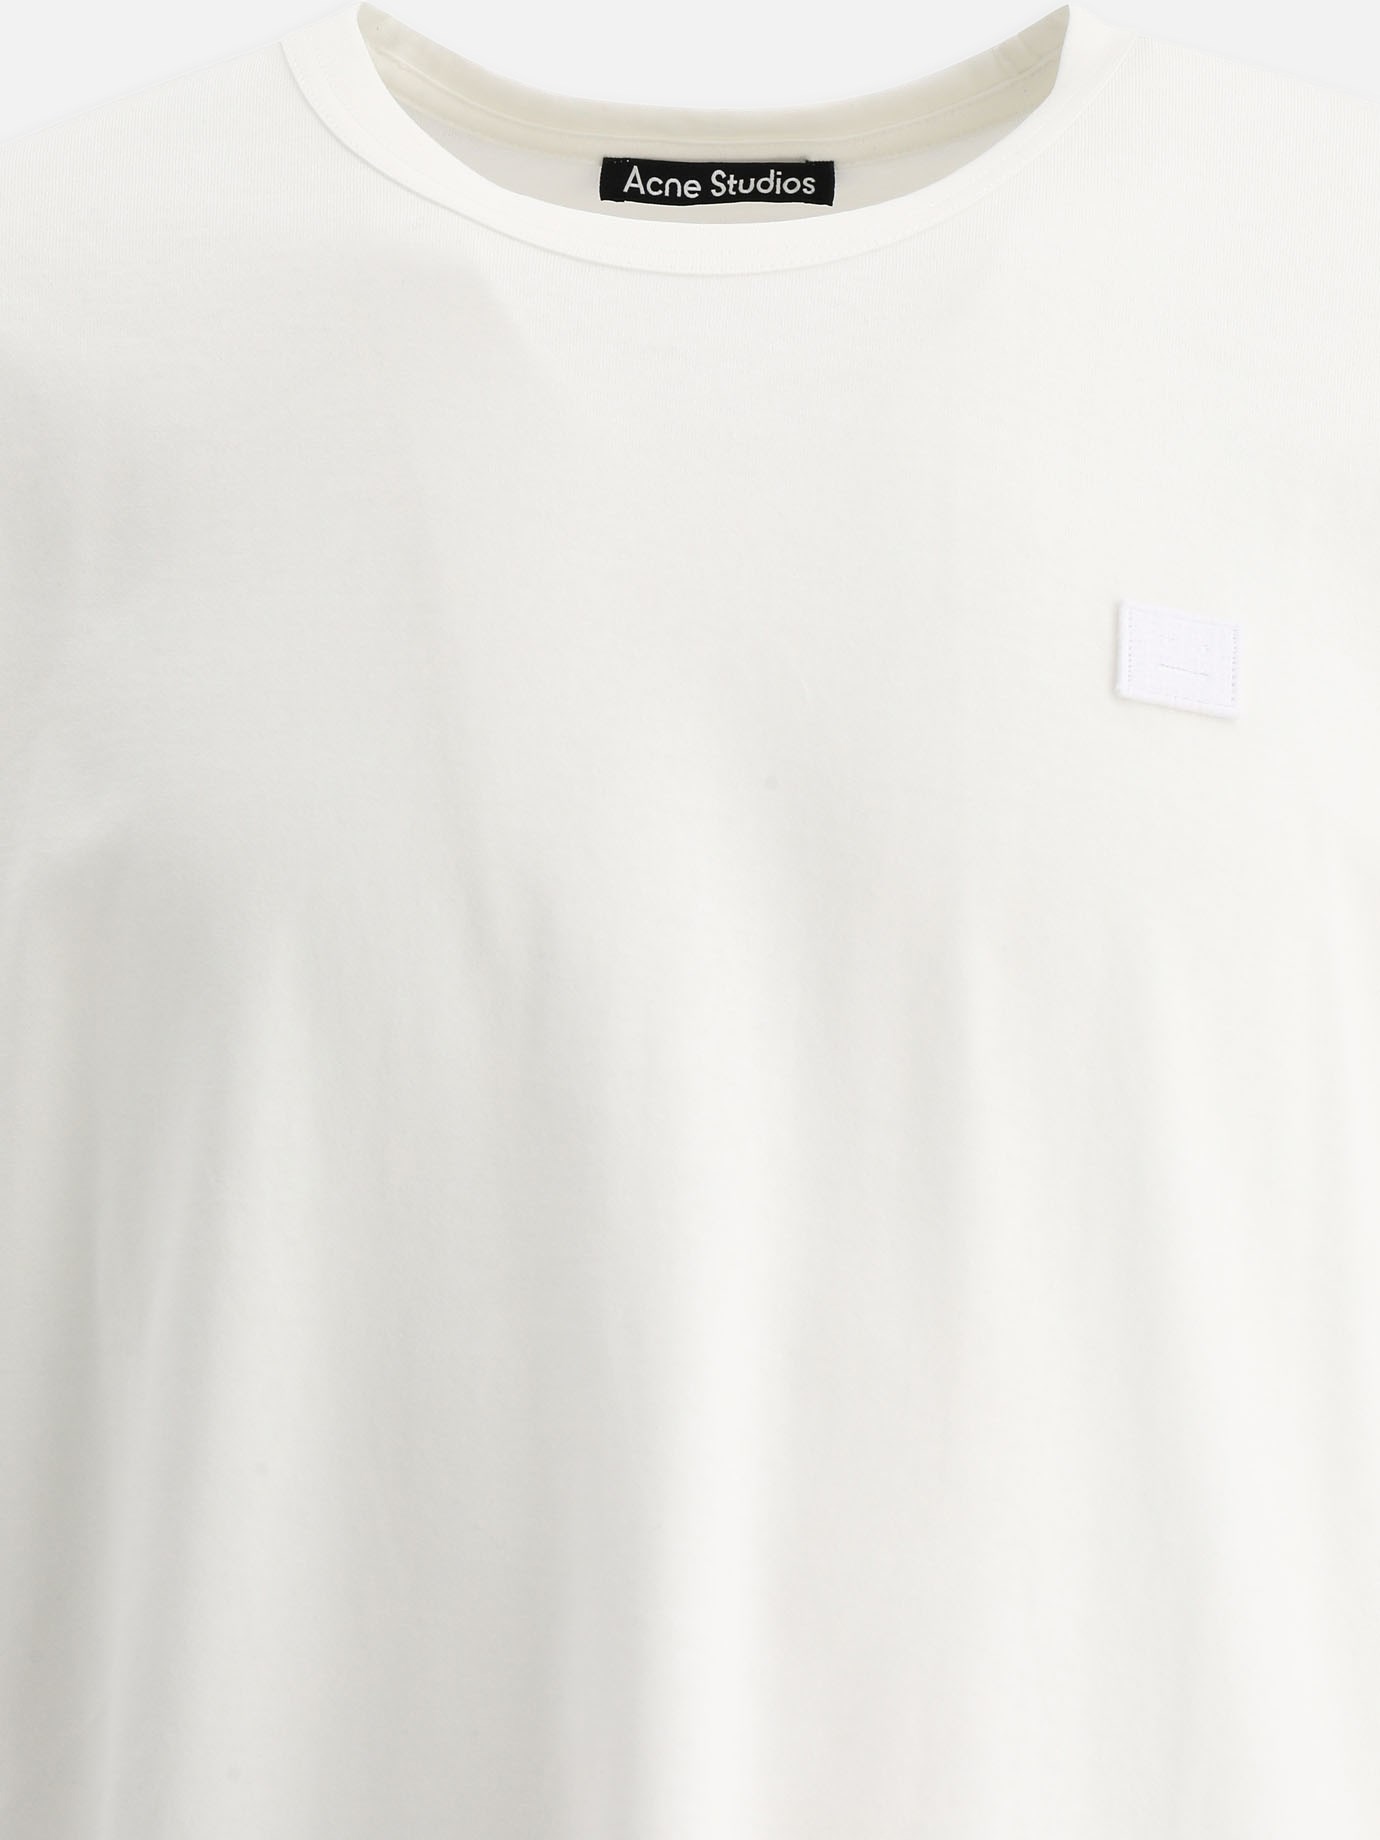  Nash Face  t-shirt by Acne Studios